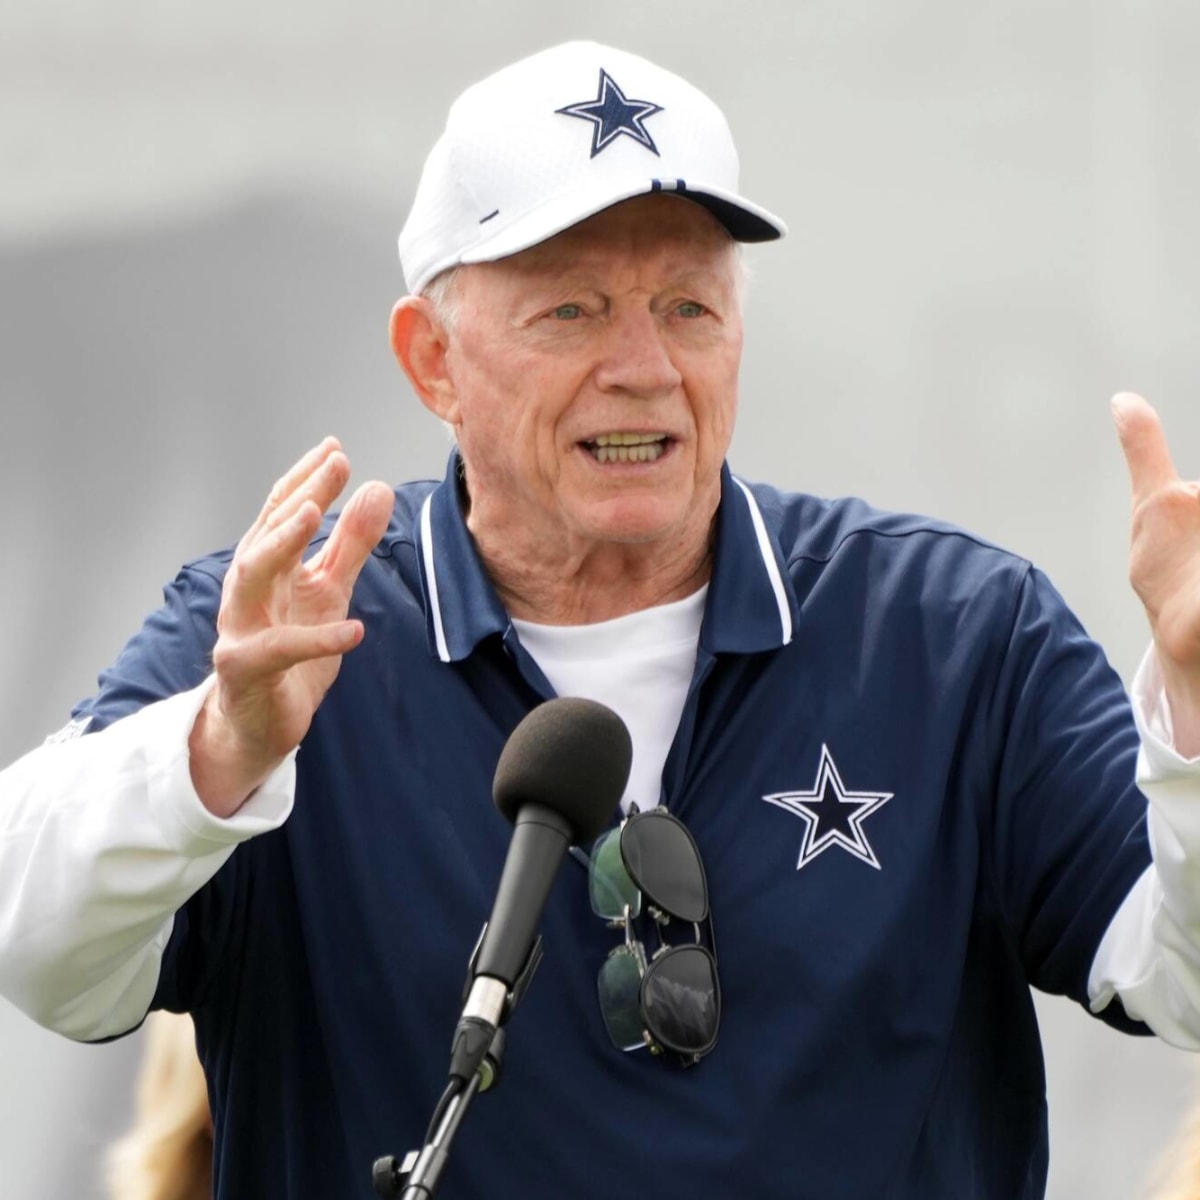 Dallas Cowboys Injury Update: Jerry Jones Reveals Latest on